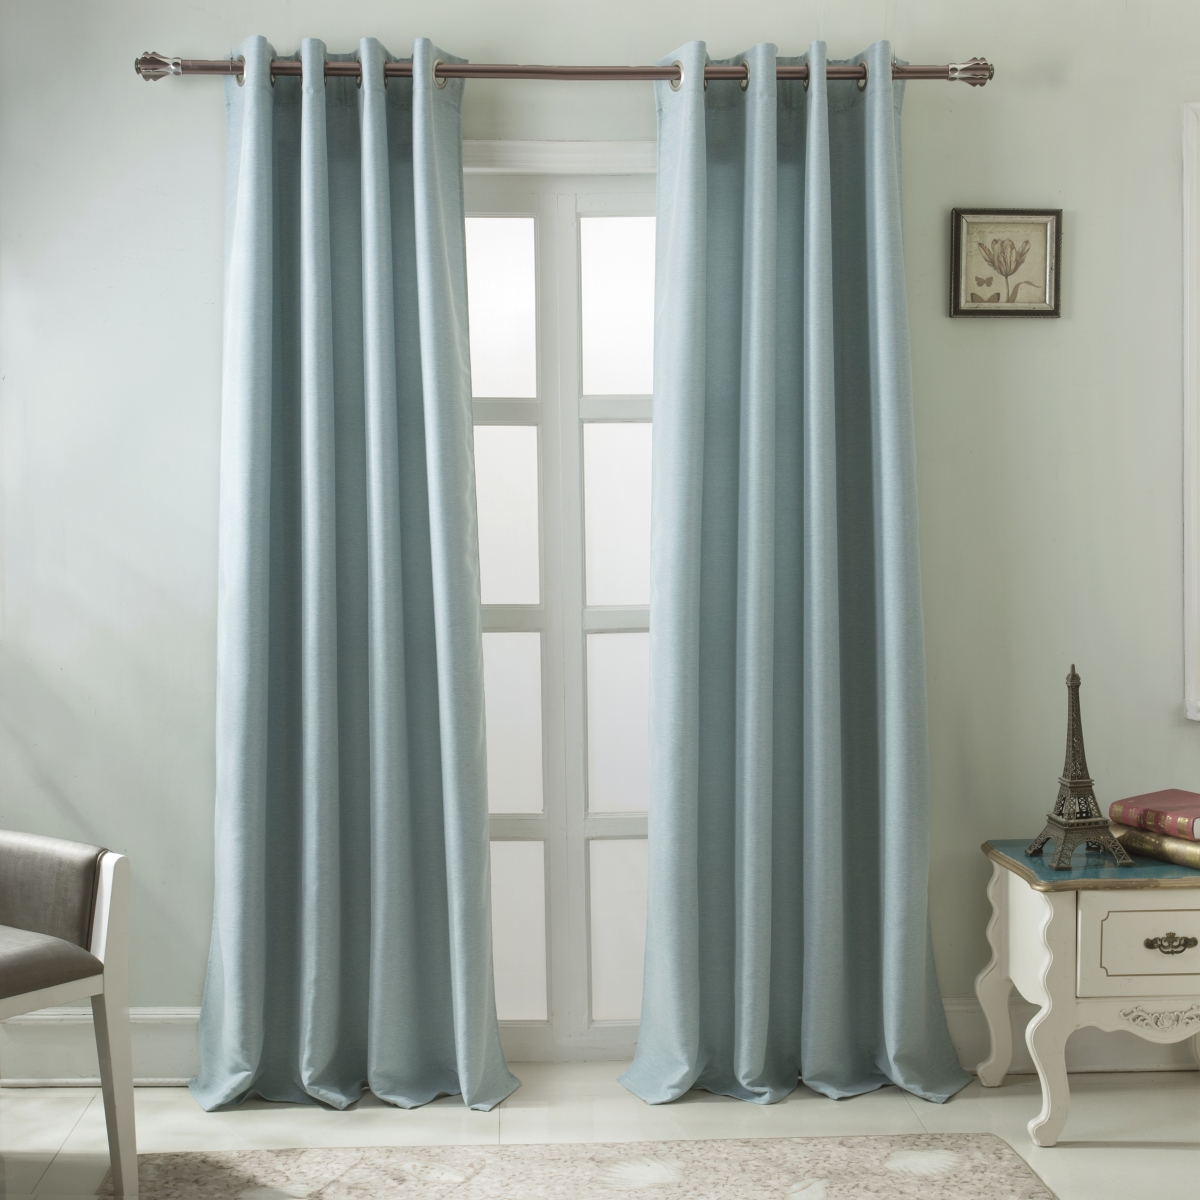 Pnb17208 54 X 84 In. Burma Room Darkening Grommet Single Curtain Panel, Blue